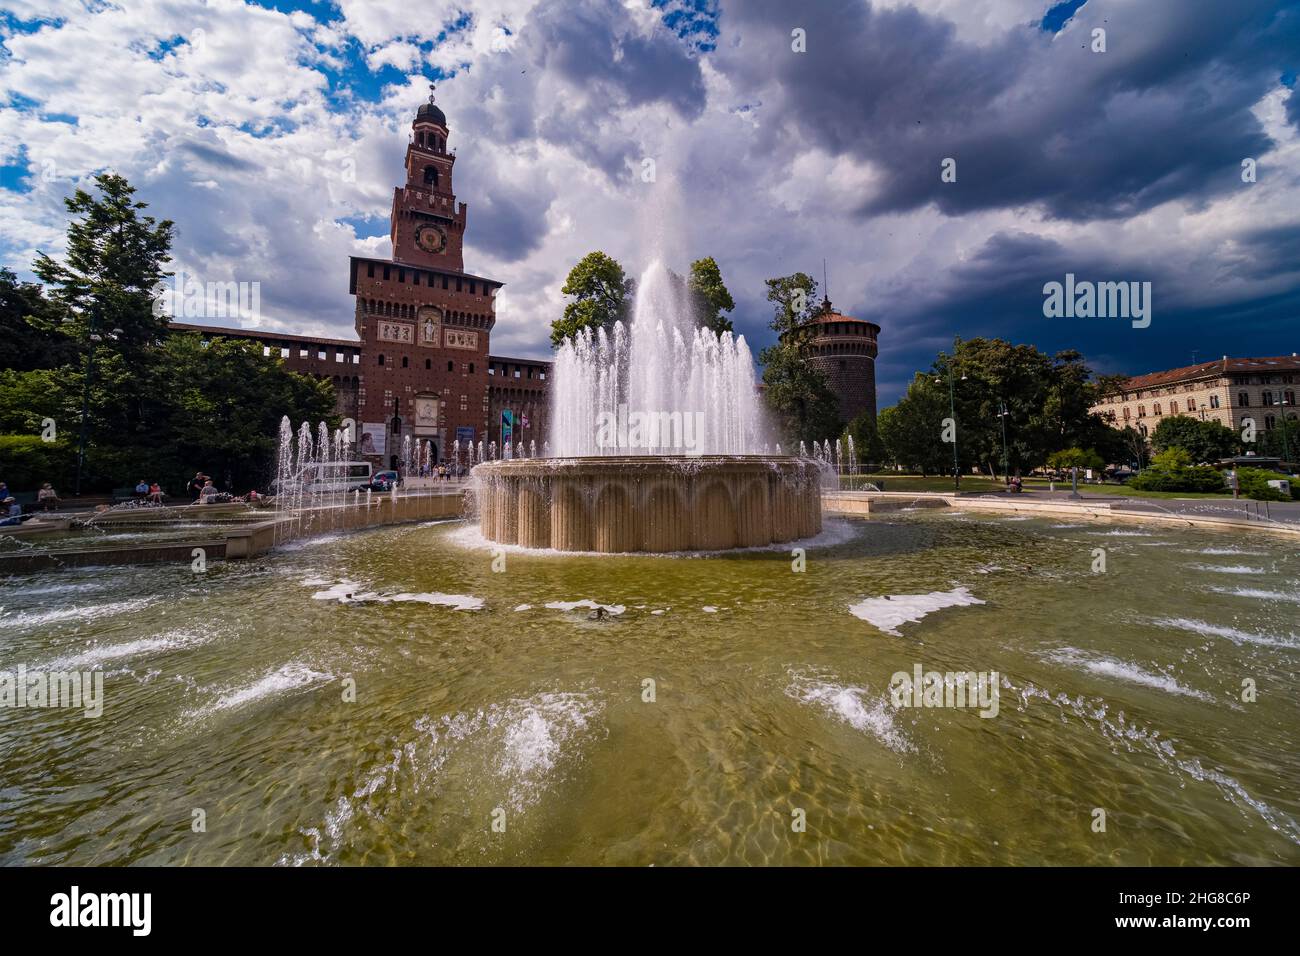 The Castello Sforzesco, Sforza's Castle, located at Piazza Castello, seen over a fountain, a thunderstorm is coming. Stock Photo